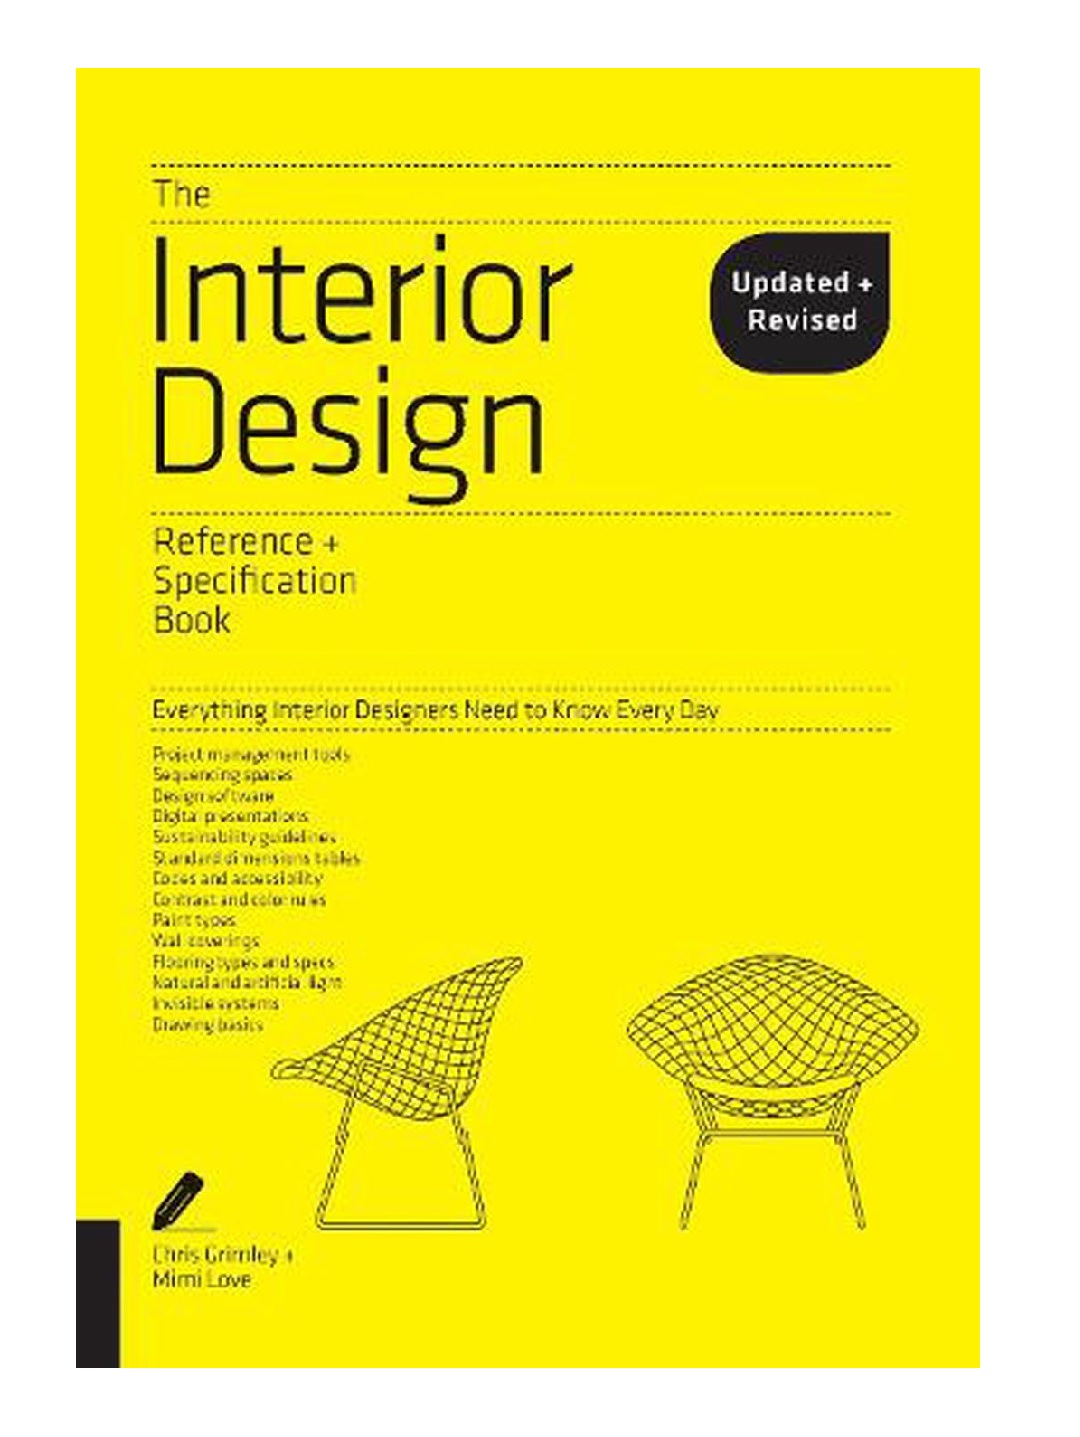 The interior design reference book